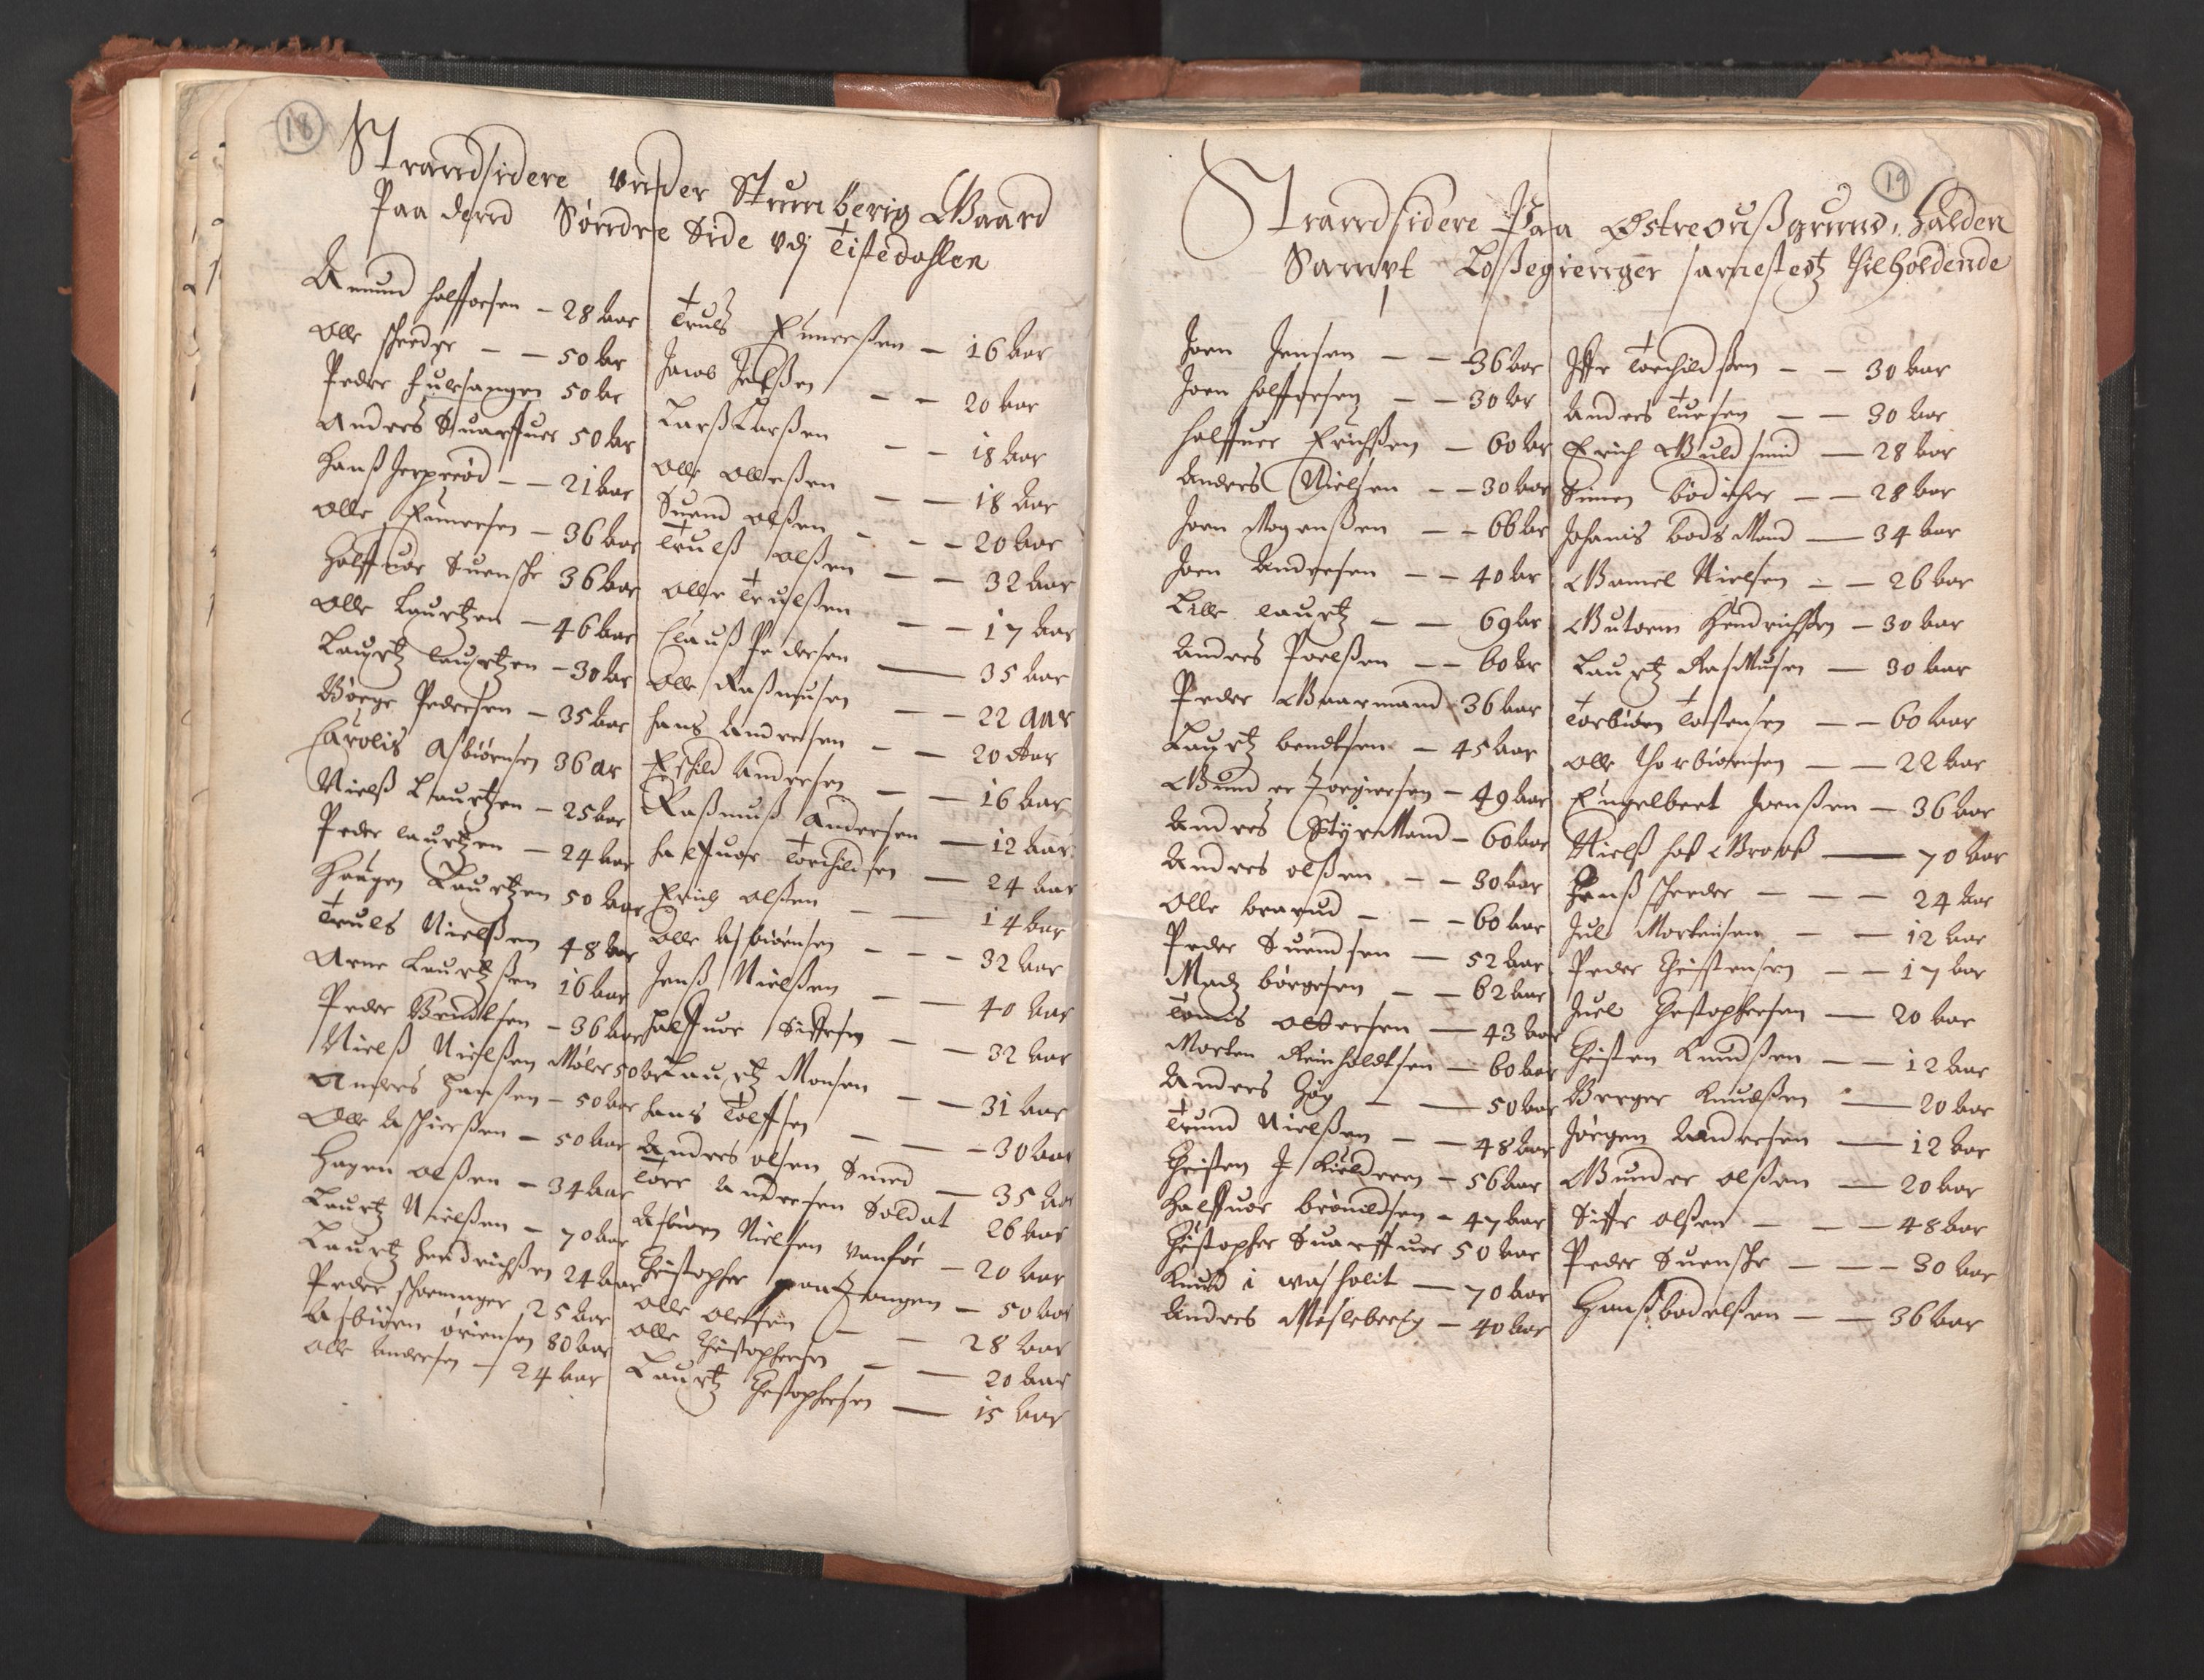 RA, Fogdenes og sorenskrivernes manntall 1664-1666, nr. 1: Fogderier (len og skipreider) i nåværende Østfold fylke, 1664, s. 18-19